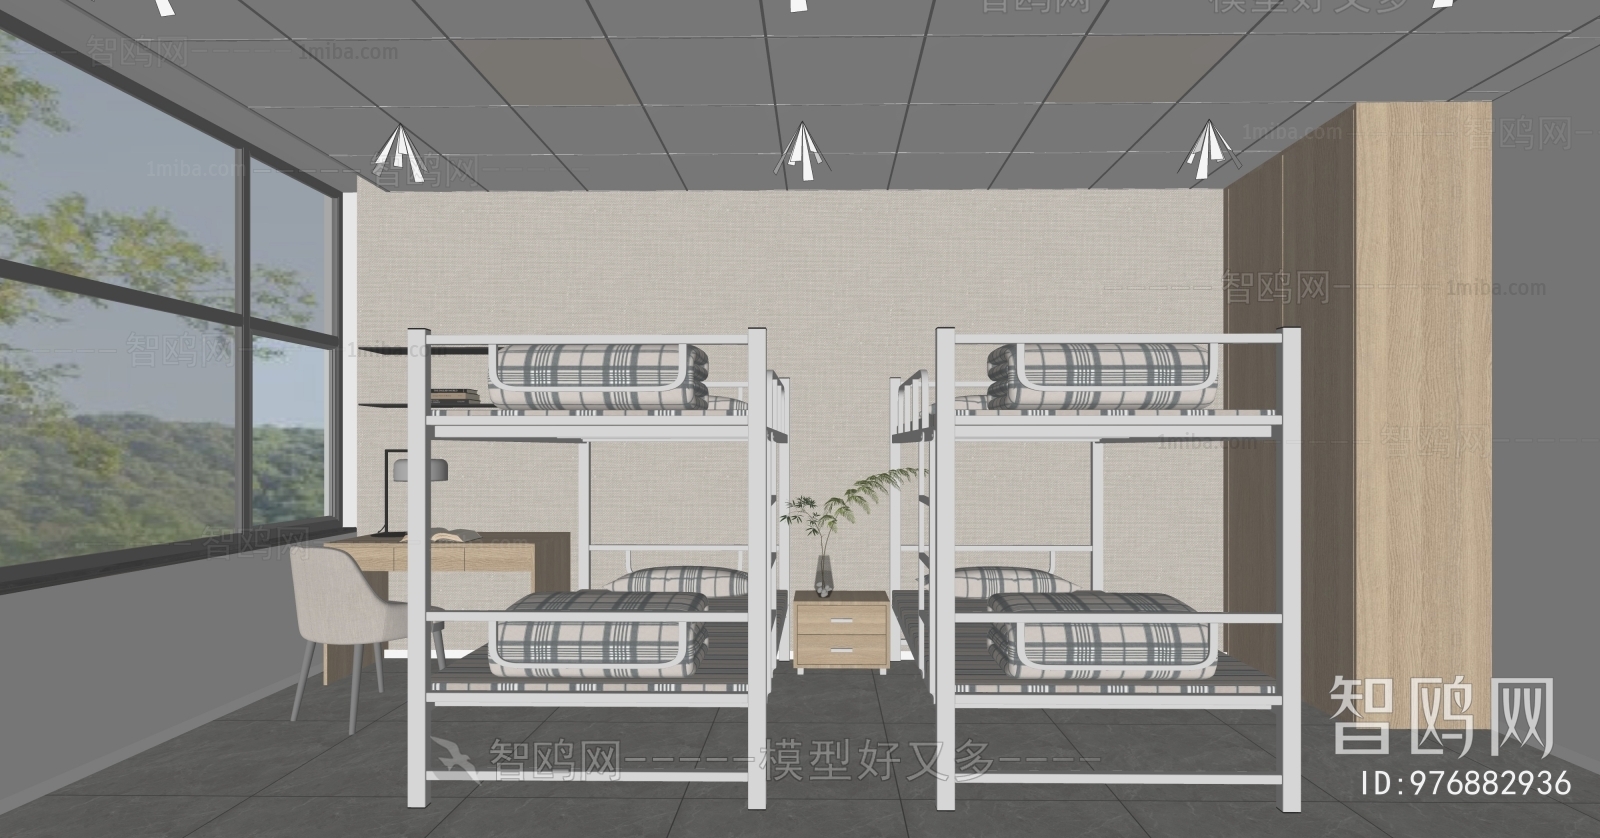 Modern Dormitory